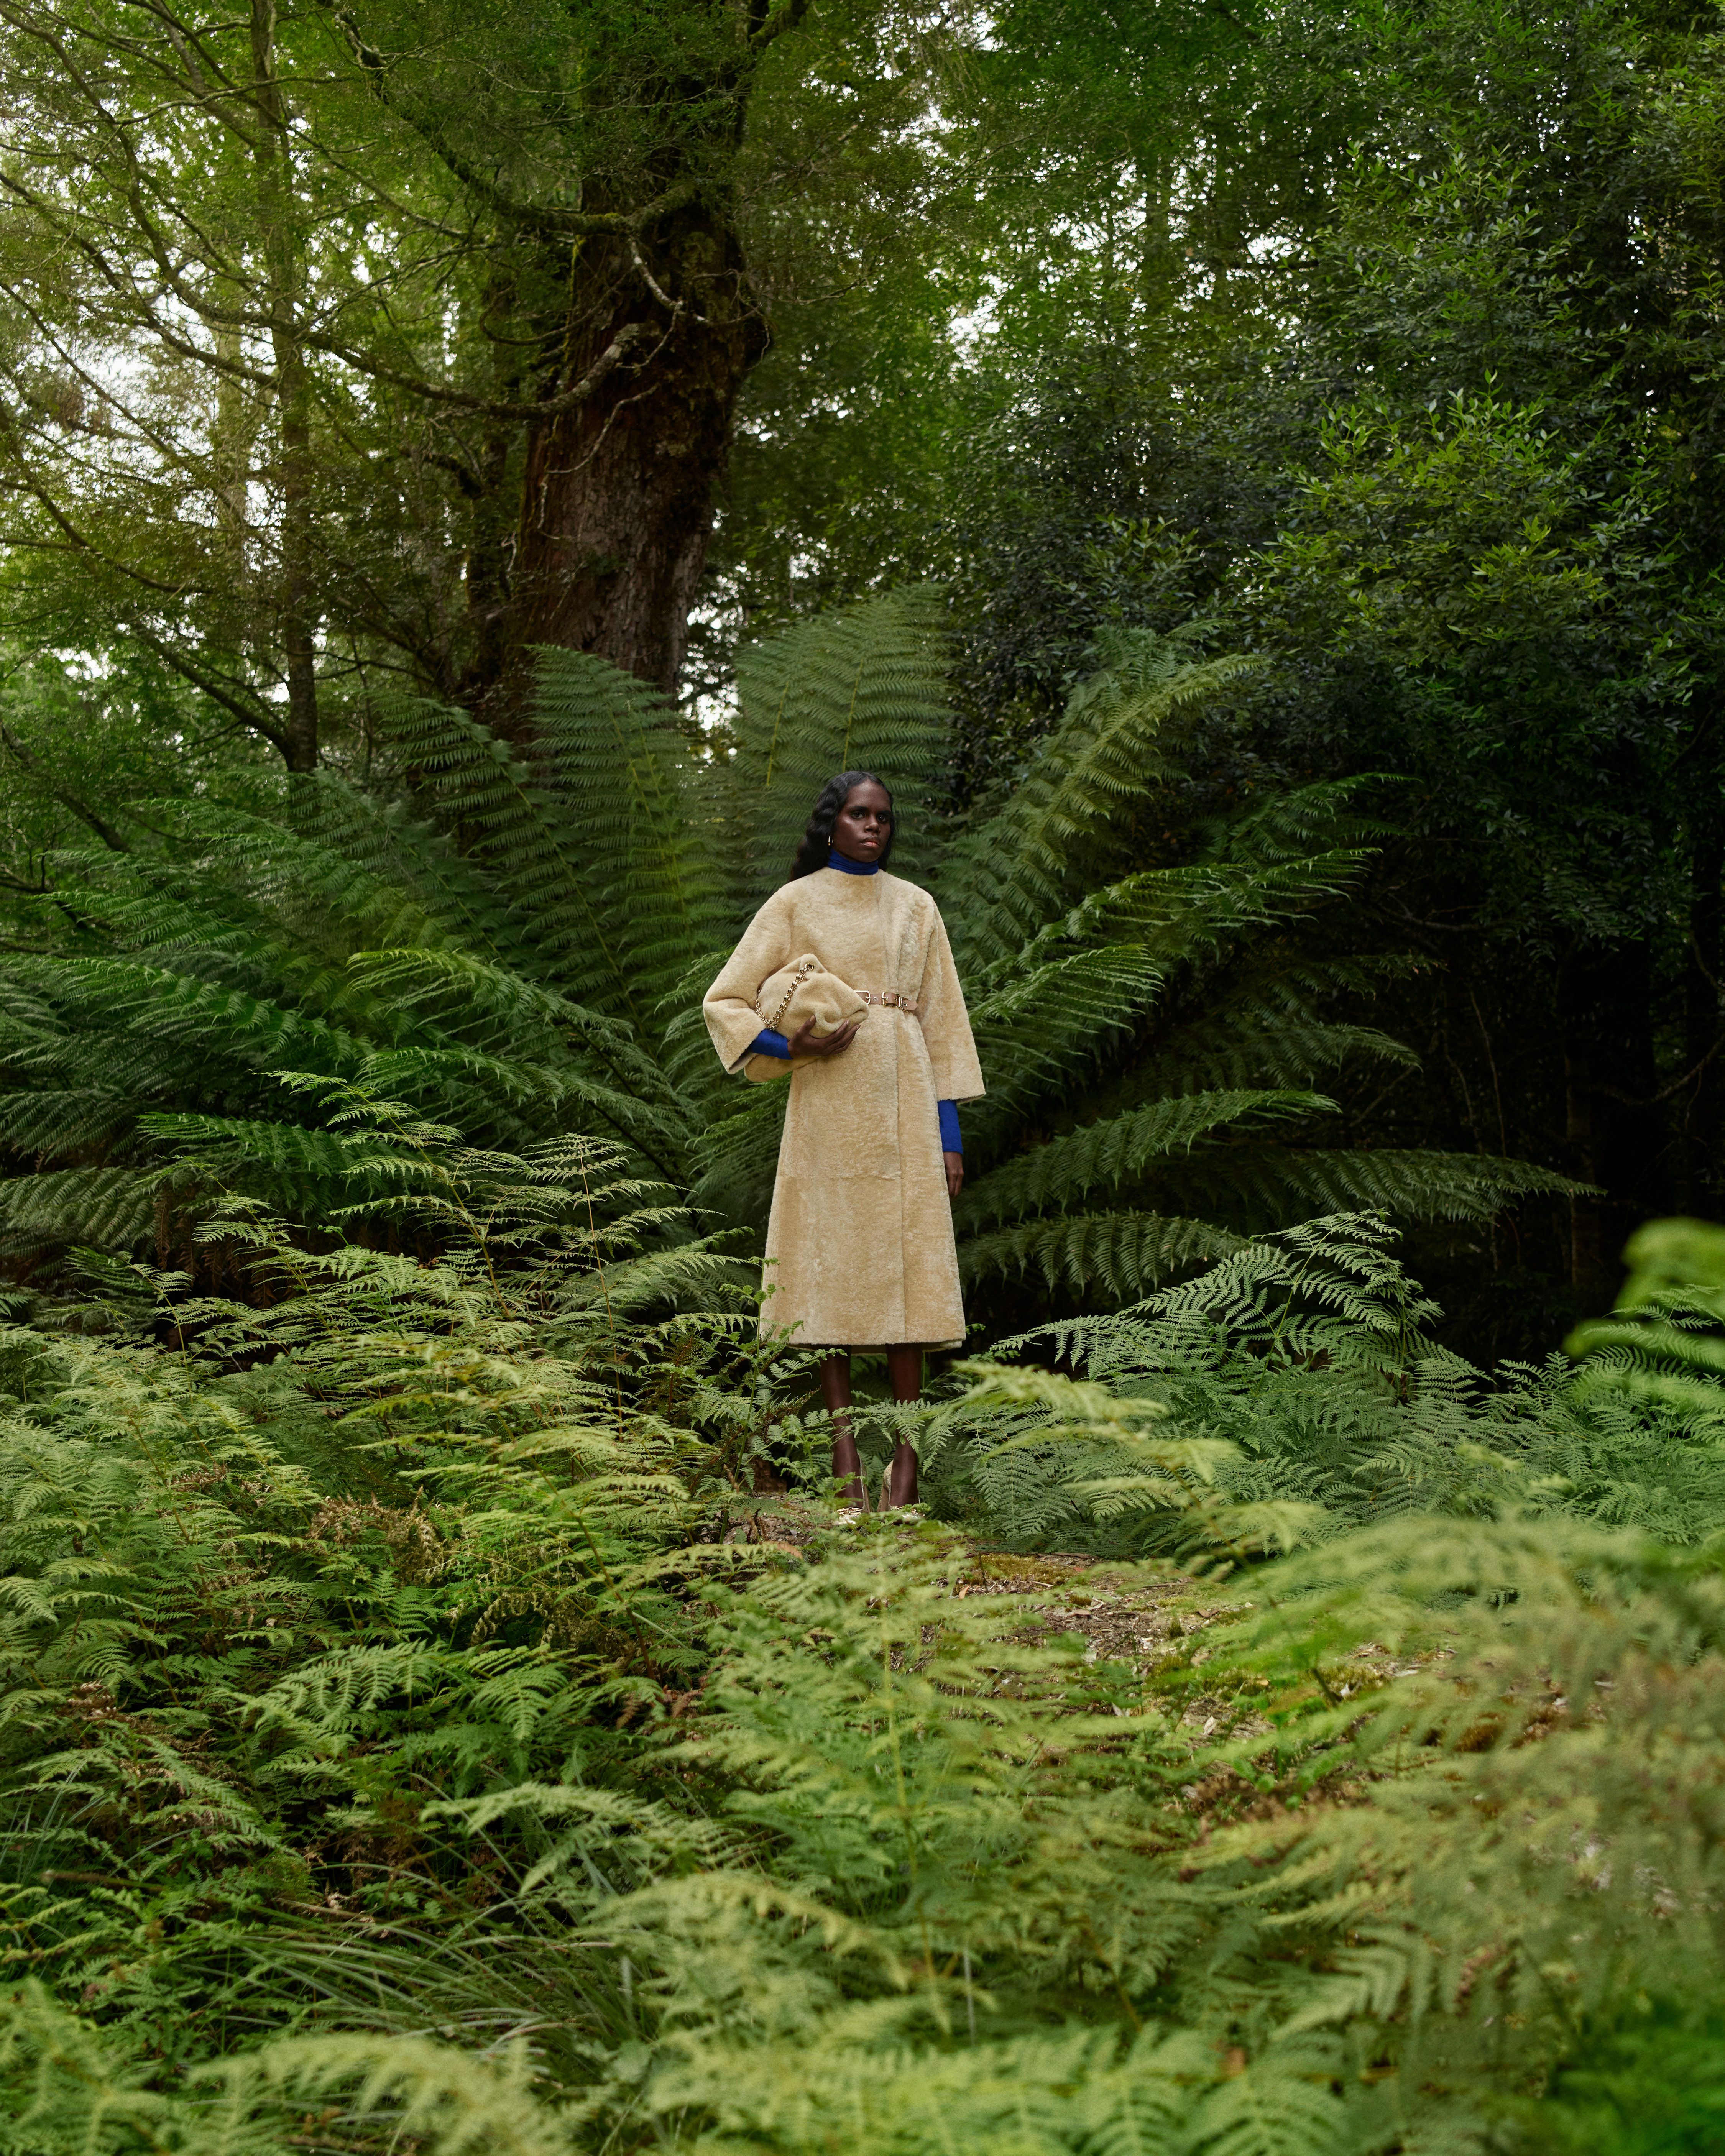 Tarlisa Gaykamangu standing in the forest wearing a yellow shearling coat